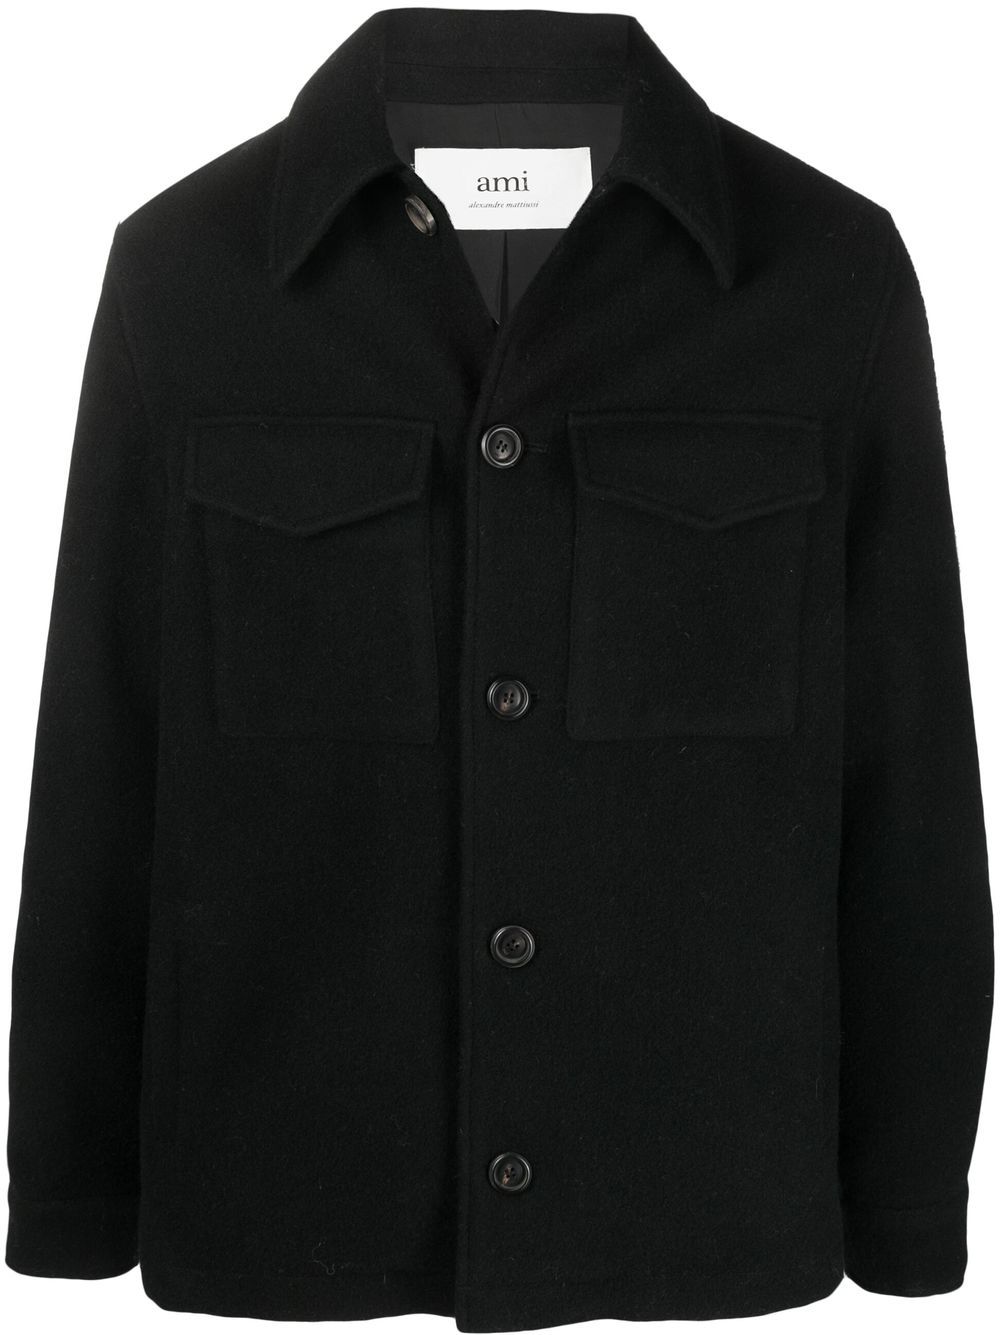 AMI Paris flap pockets shirt jacket - Black von AMI Paris